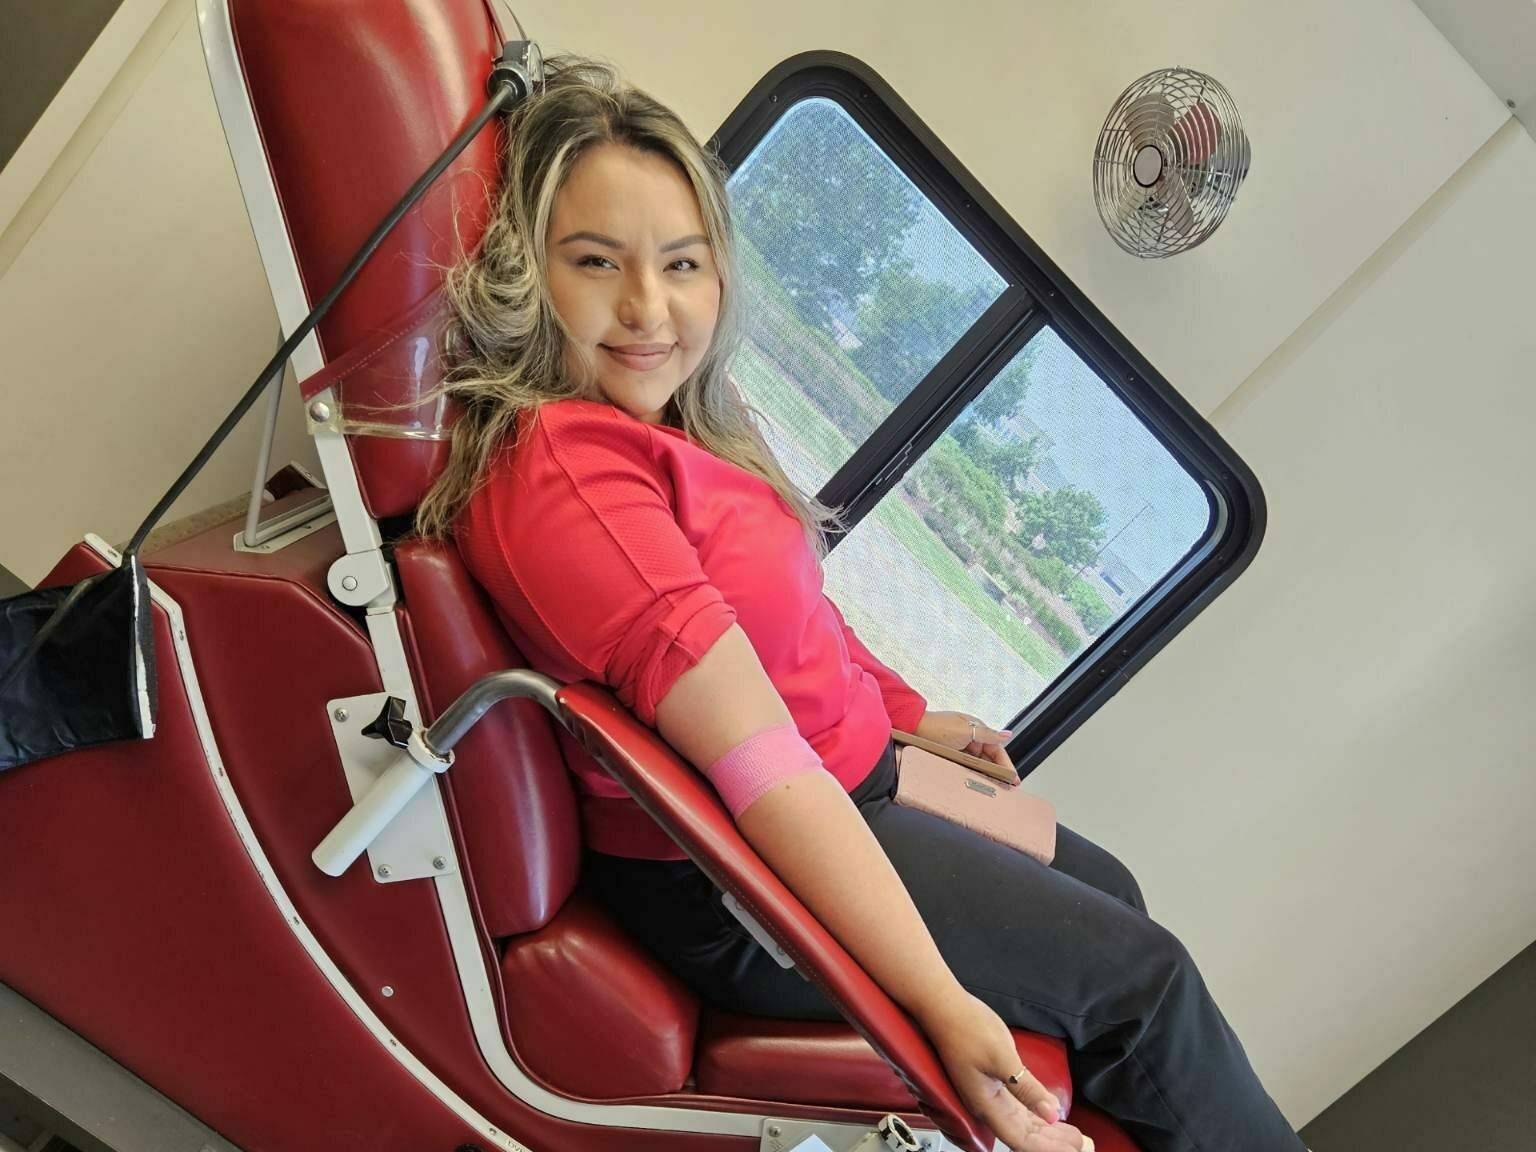 Employee donating blood